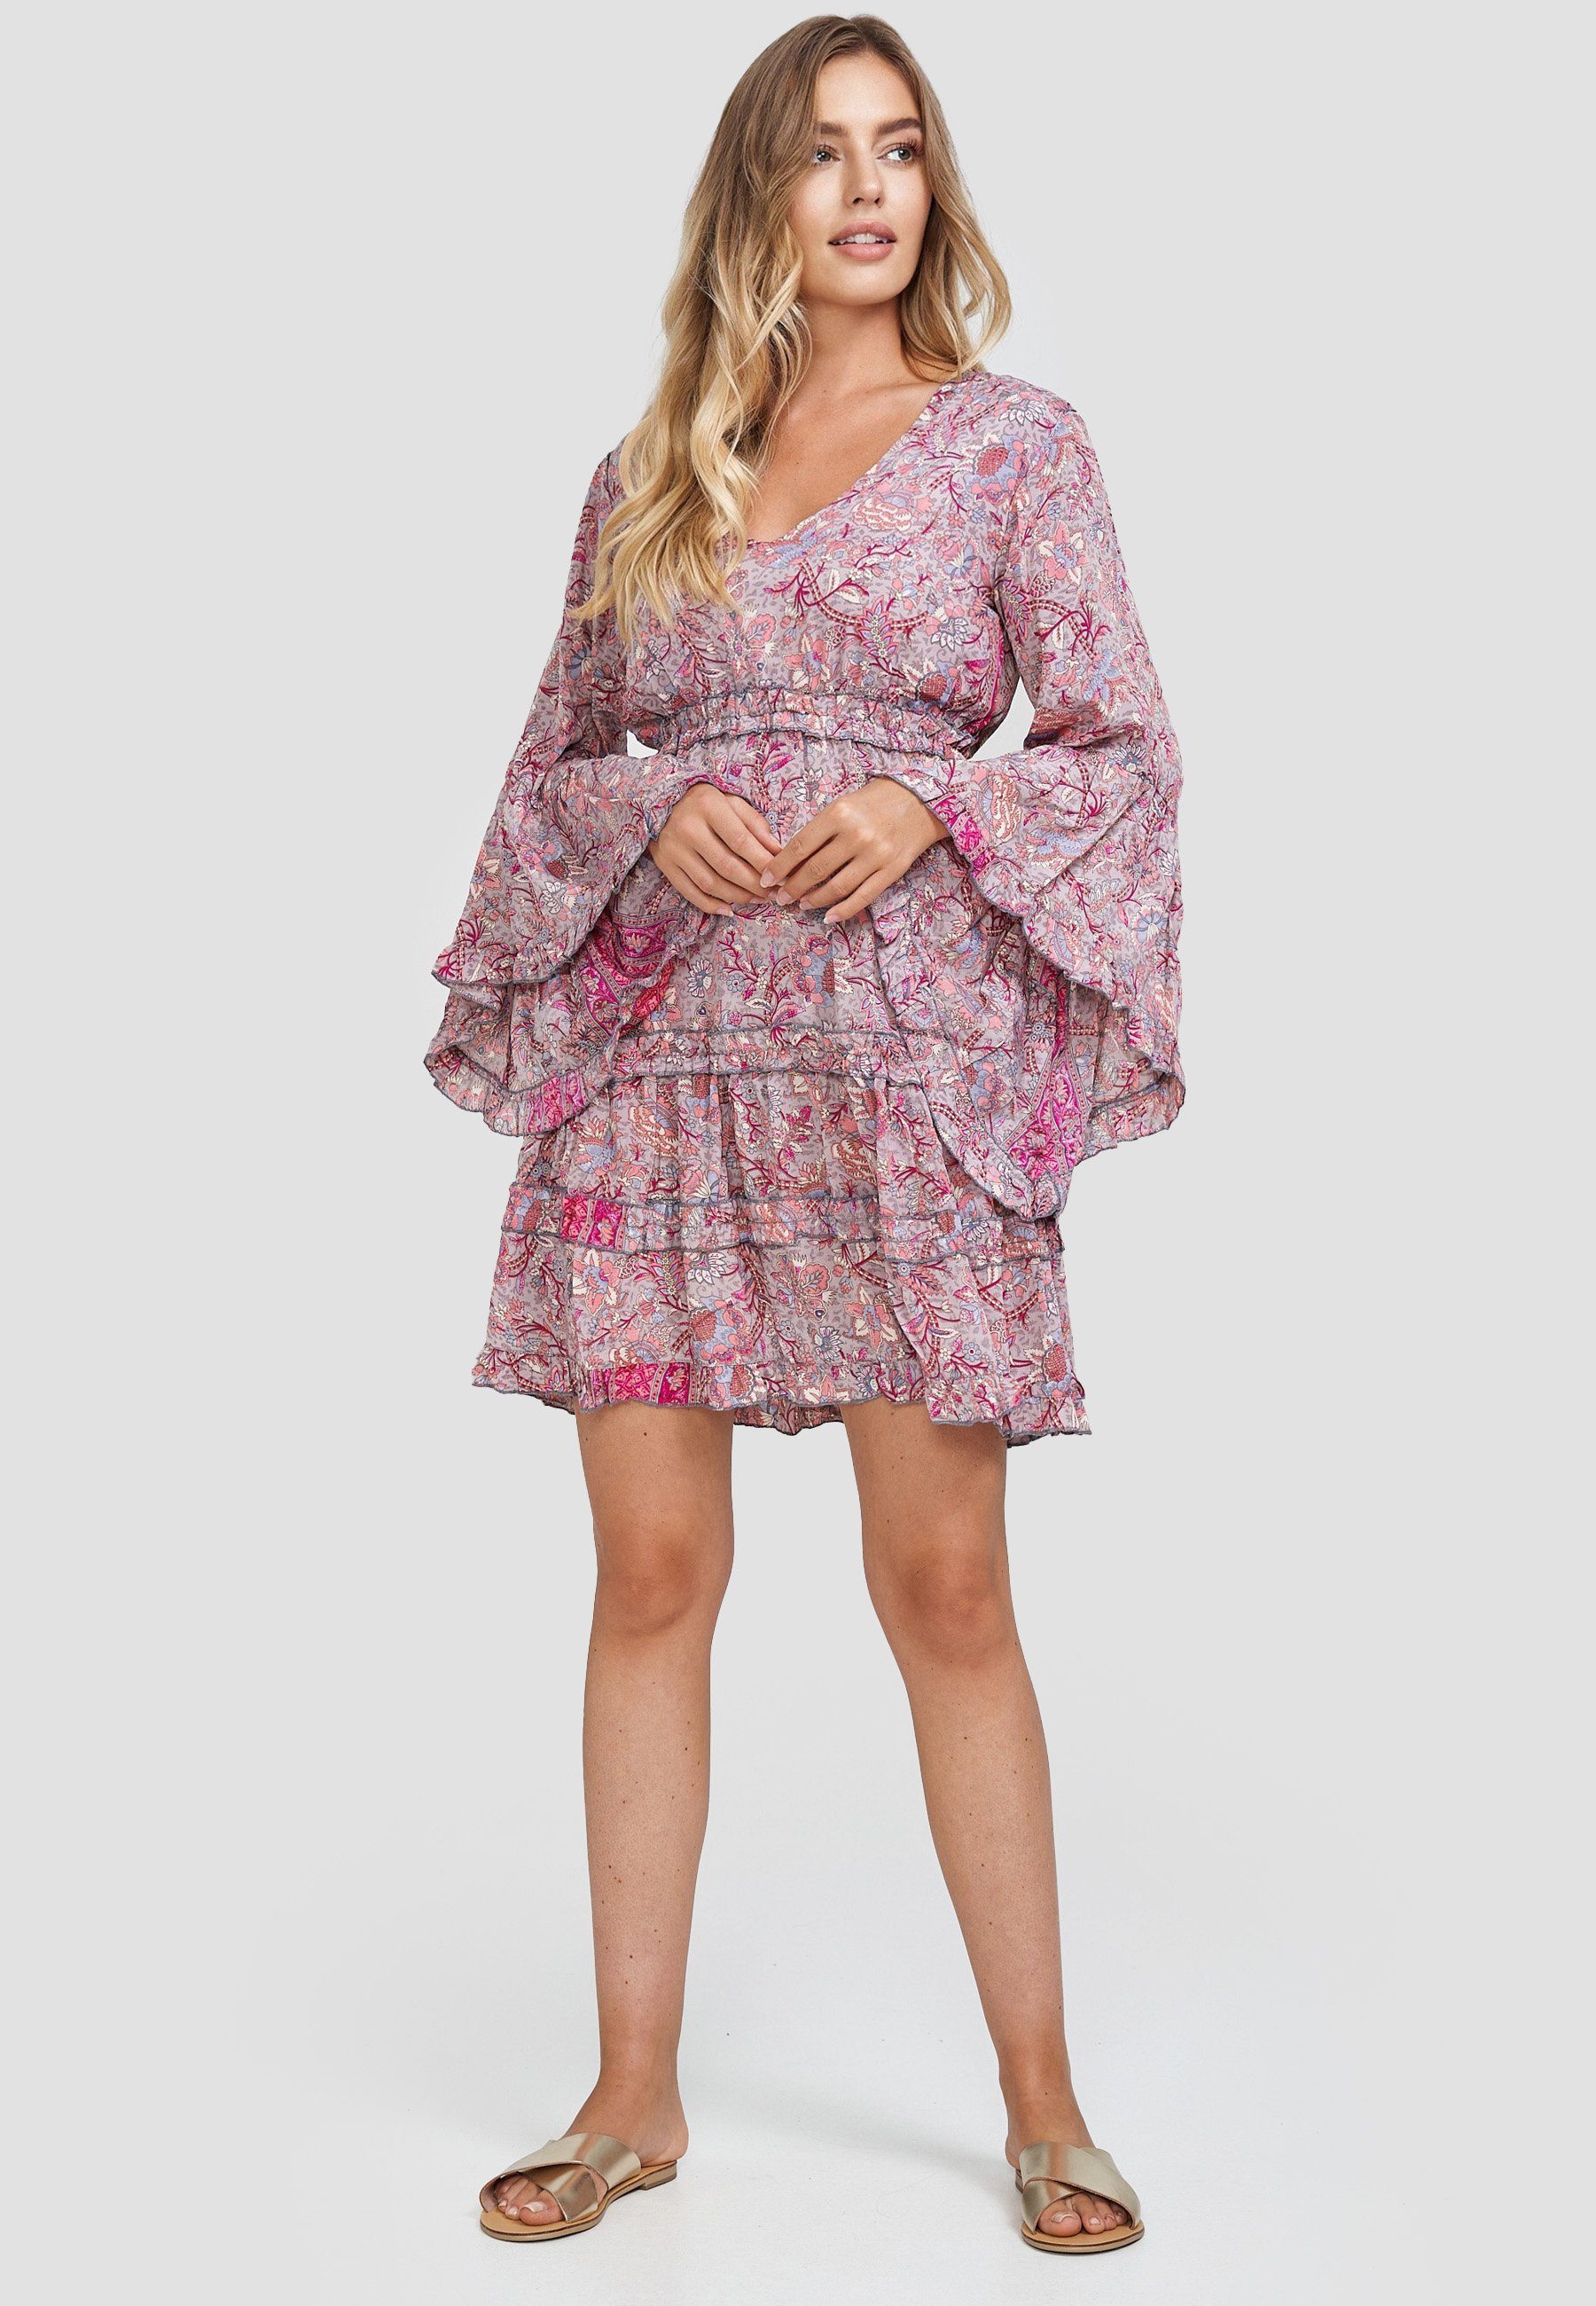 Decay Jerseykleid in verspieltem Design rosa | Jerseykleider